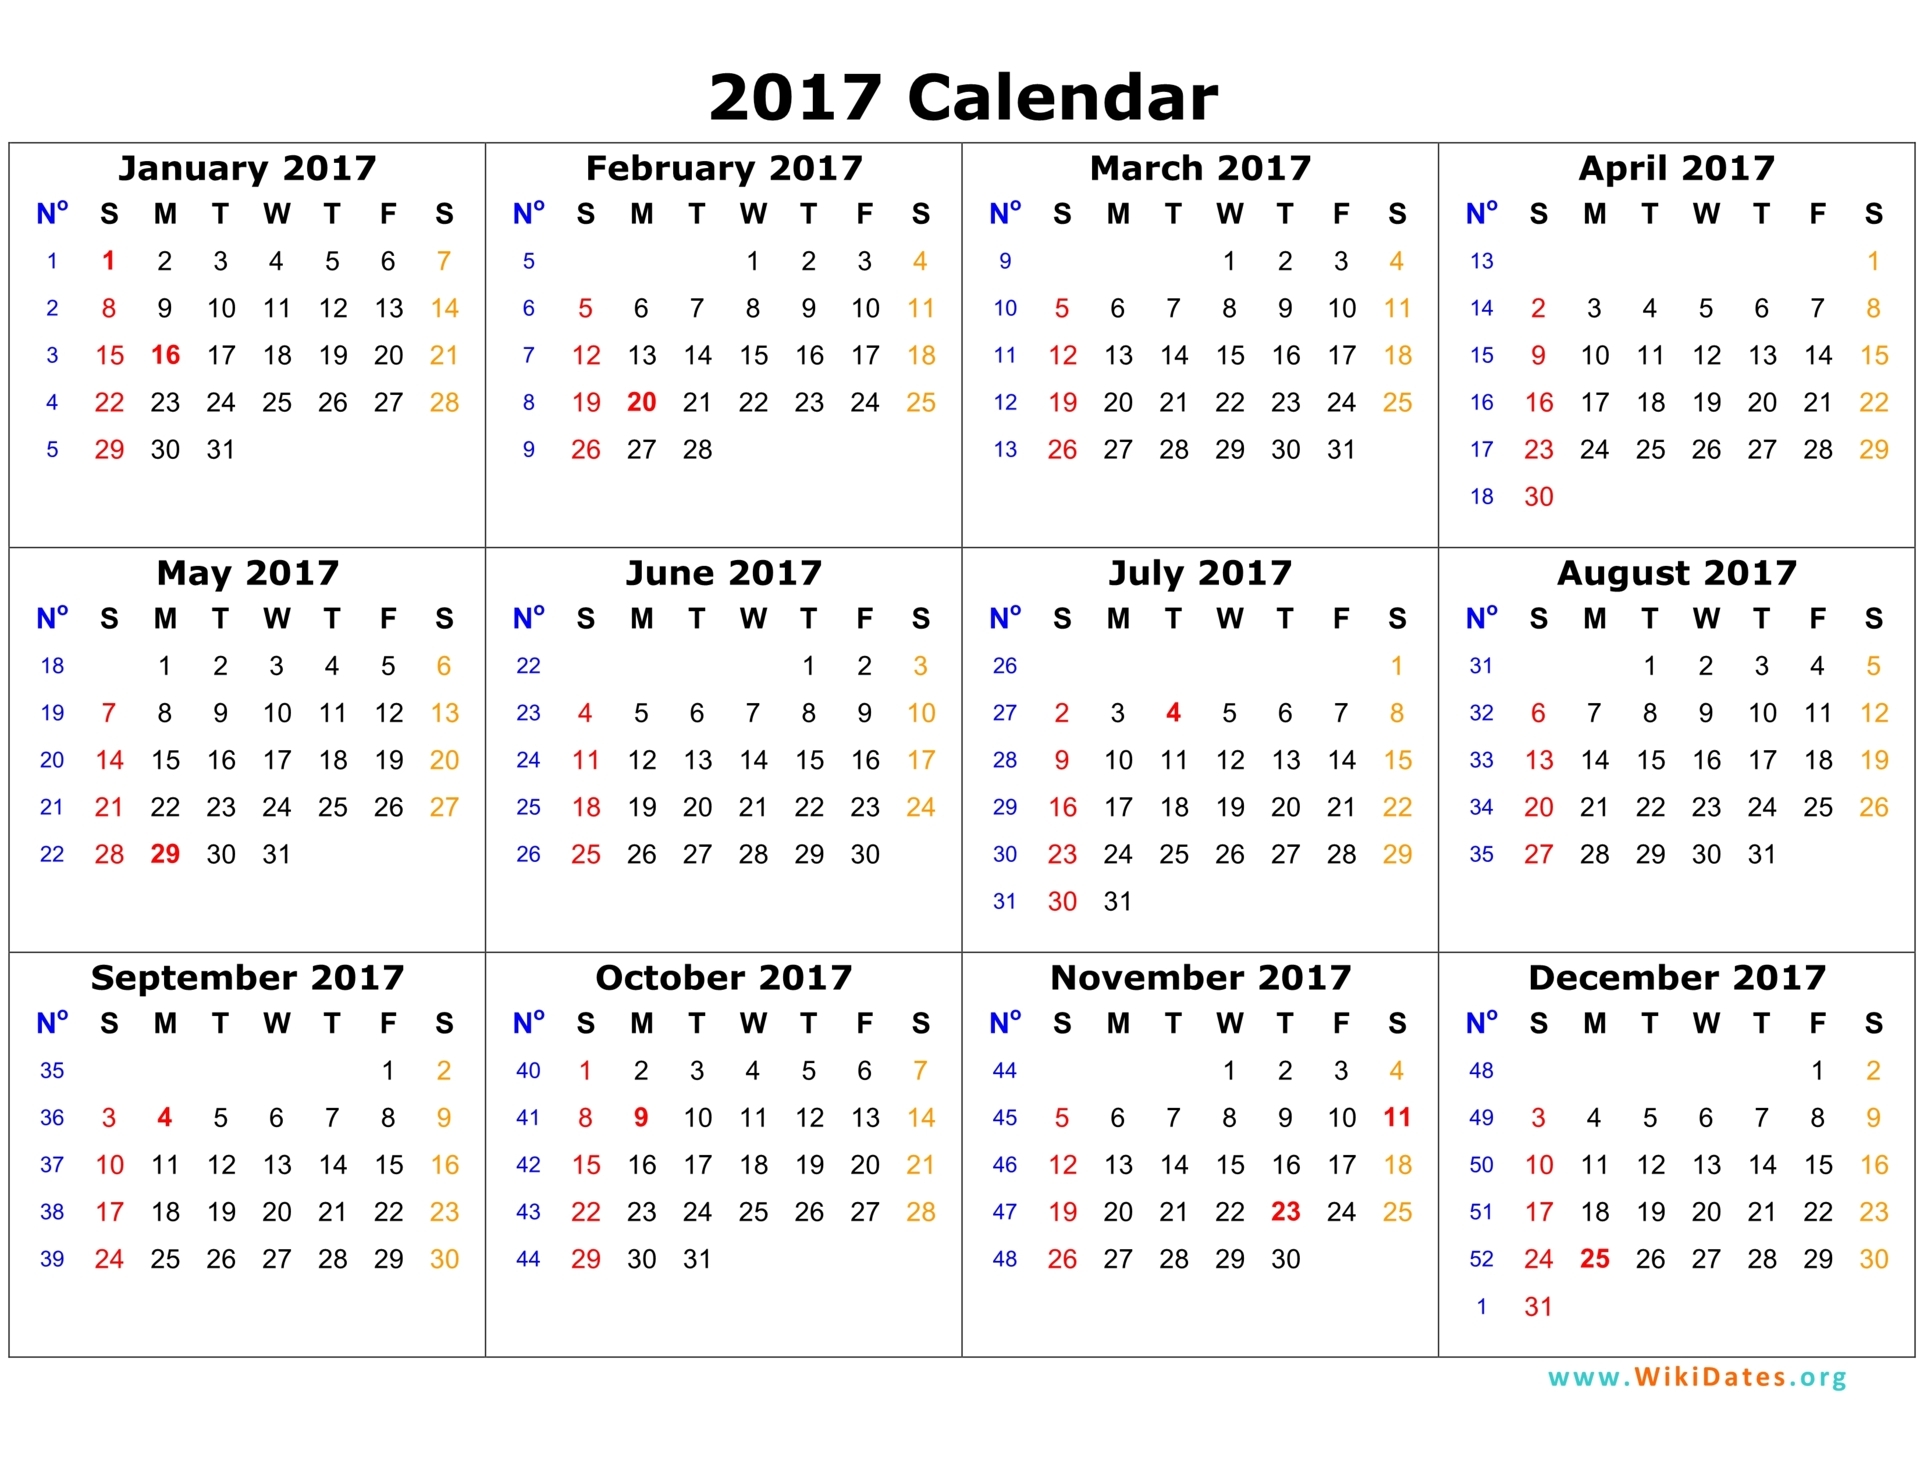 2017-calendar-wikidates